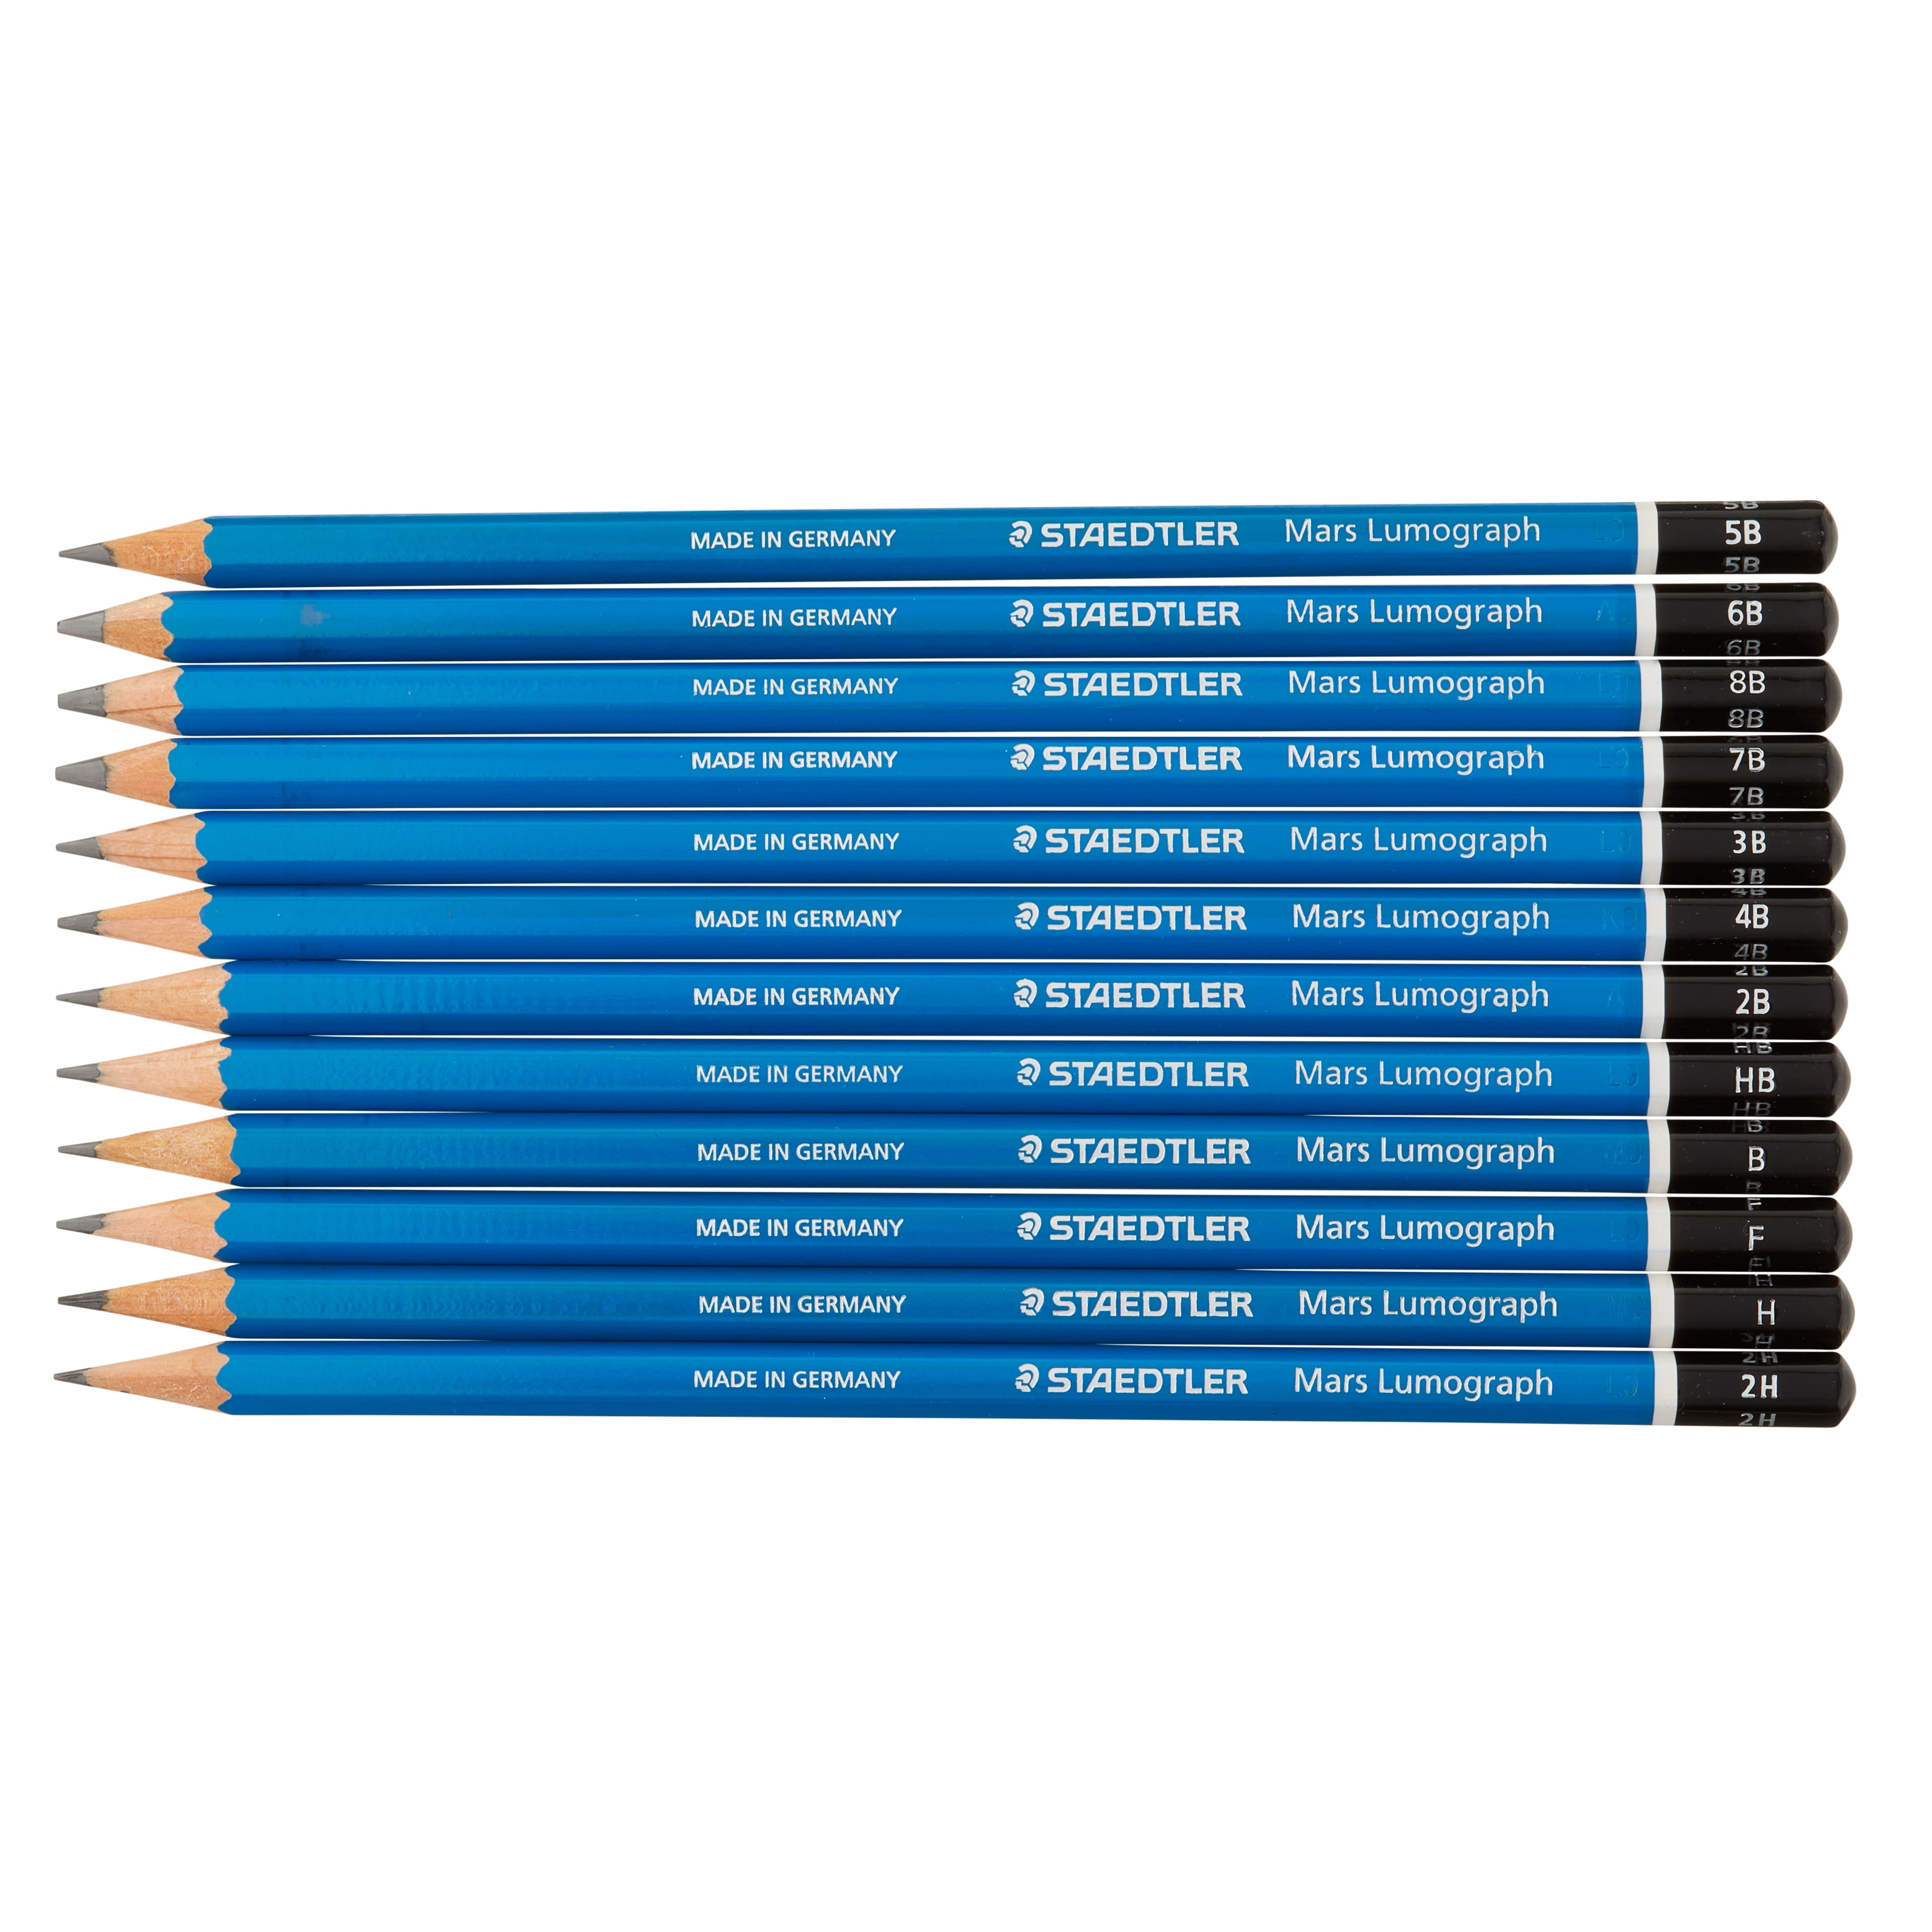 Amazon.com : STAEDTLER Mars Lumograph Art Drawing Pencils, 12 Pack Graphite  Pencils in Metal Case, Break-Resistant Bonded Lead, 100 G12,Silver/Blue :  Wood Lead Pencils : Office Products